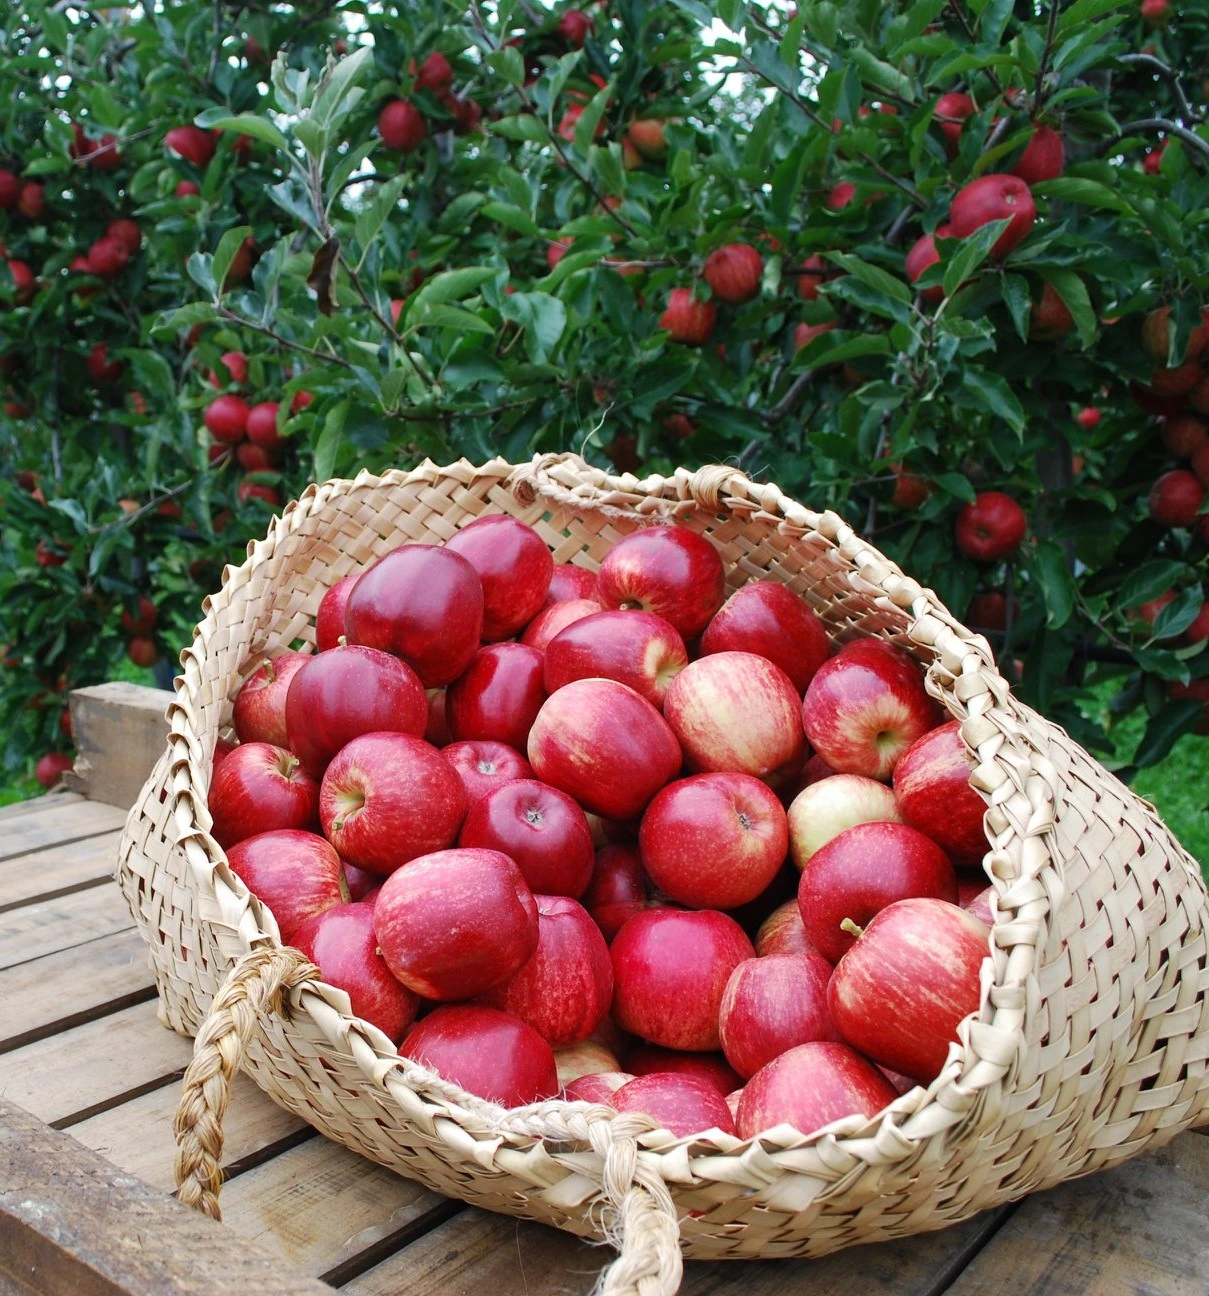 A flax bag full of apples.